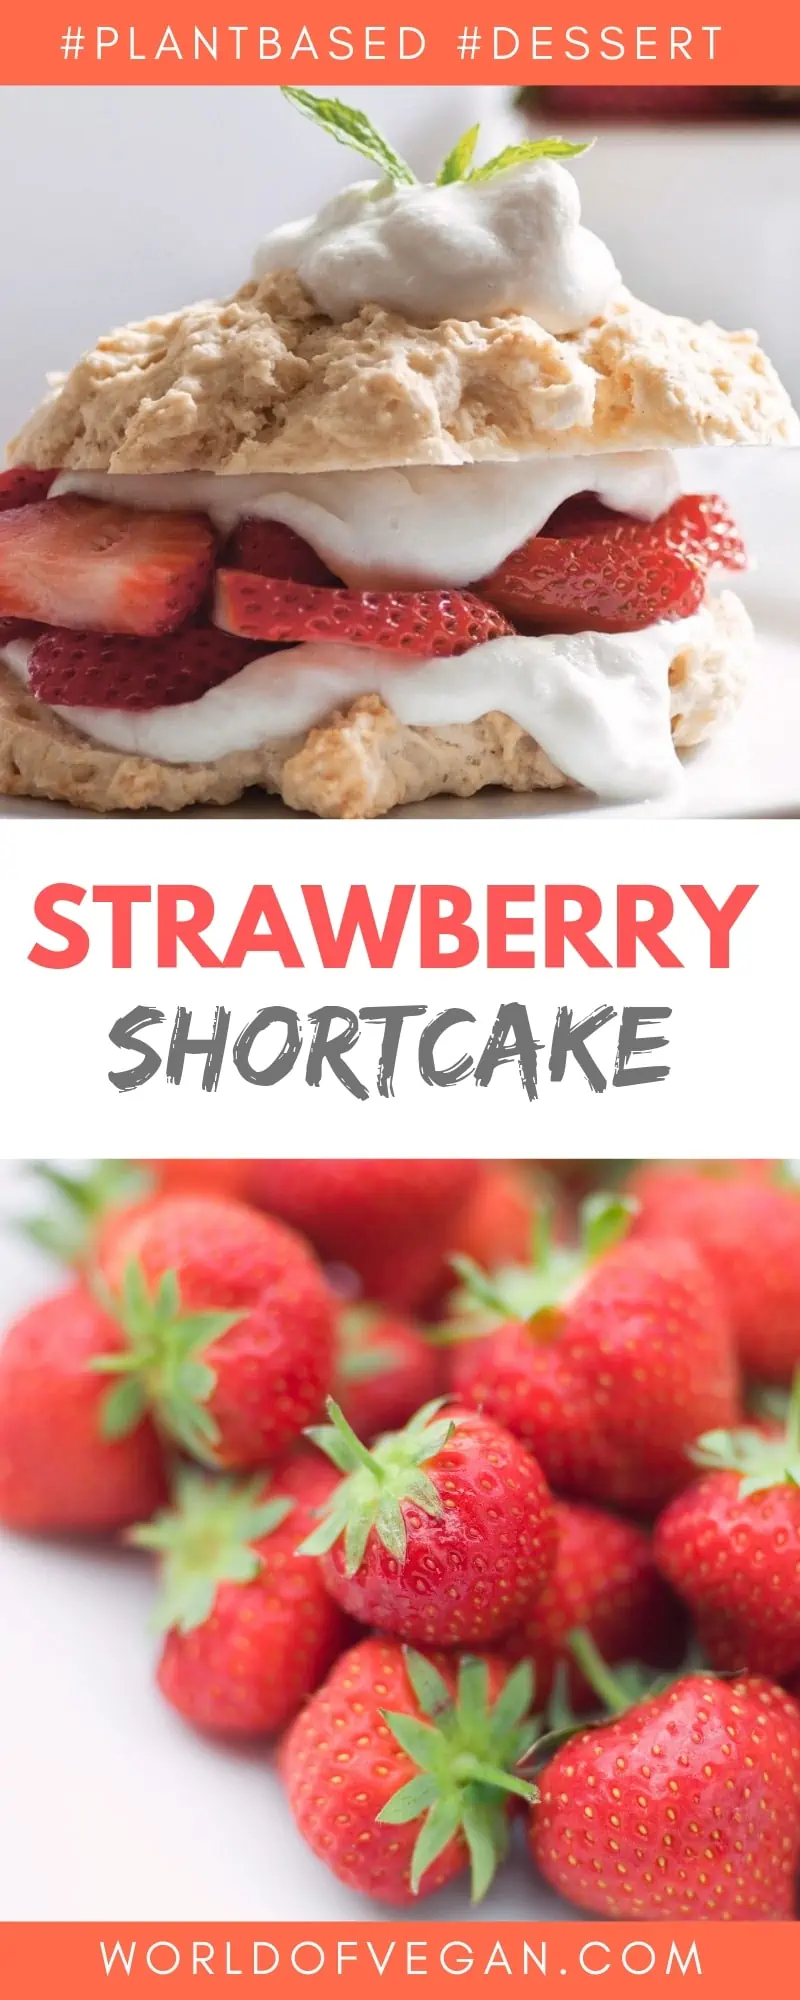 Easy Vegan Strawberry Shortcake Recipe | WorldofVegan.com | #shortcake #cake #picnic #strawberry #tea #party #worldofvegan